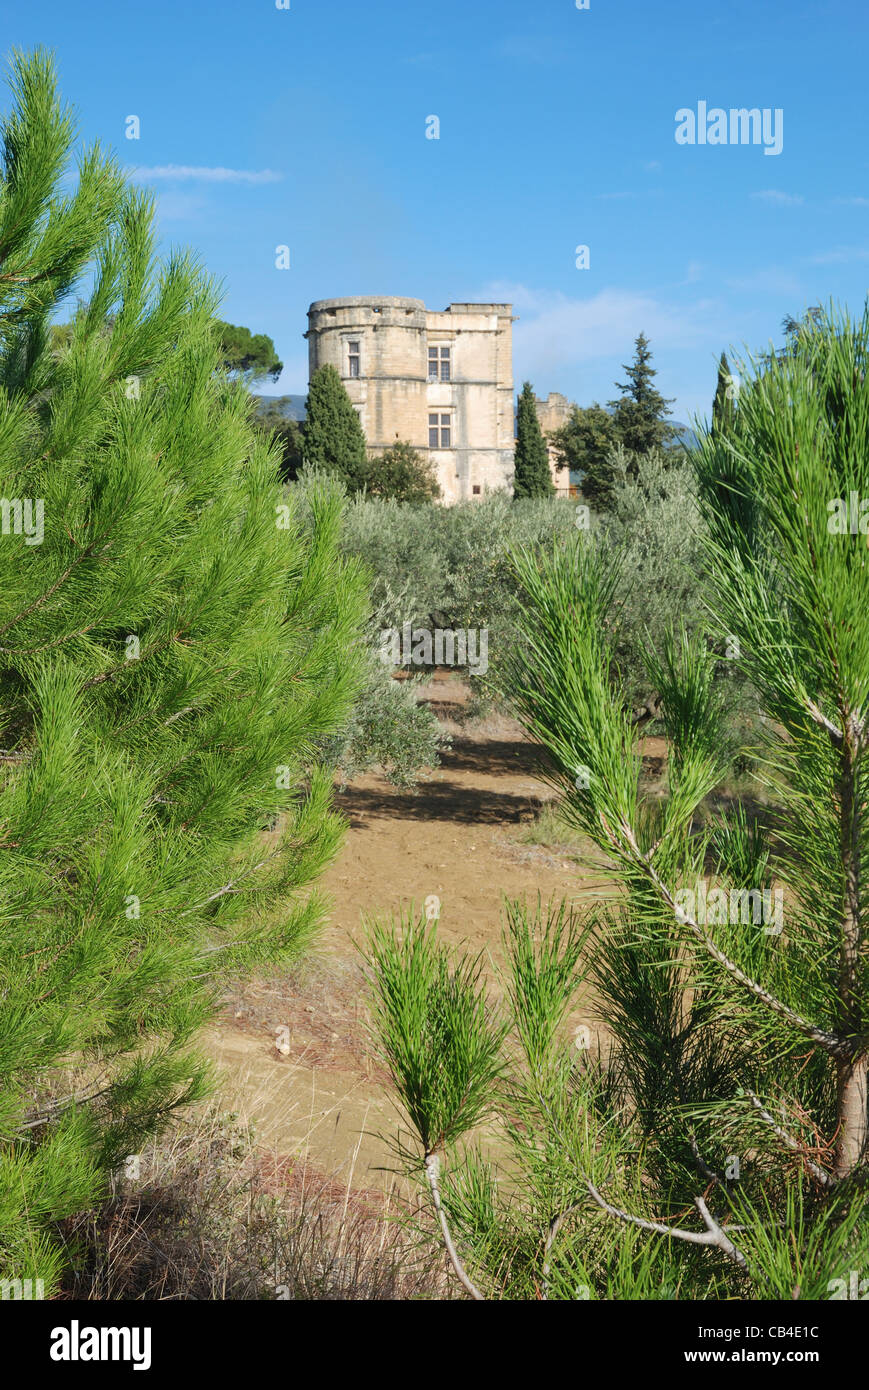 Chateau de Lourmarin, Lourmarin, Provence, France. Stock Photo